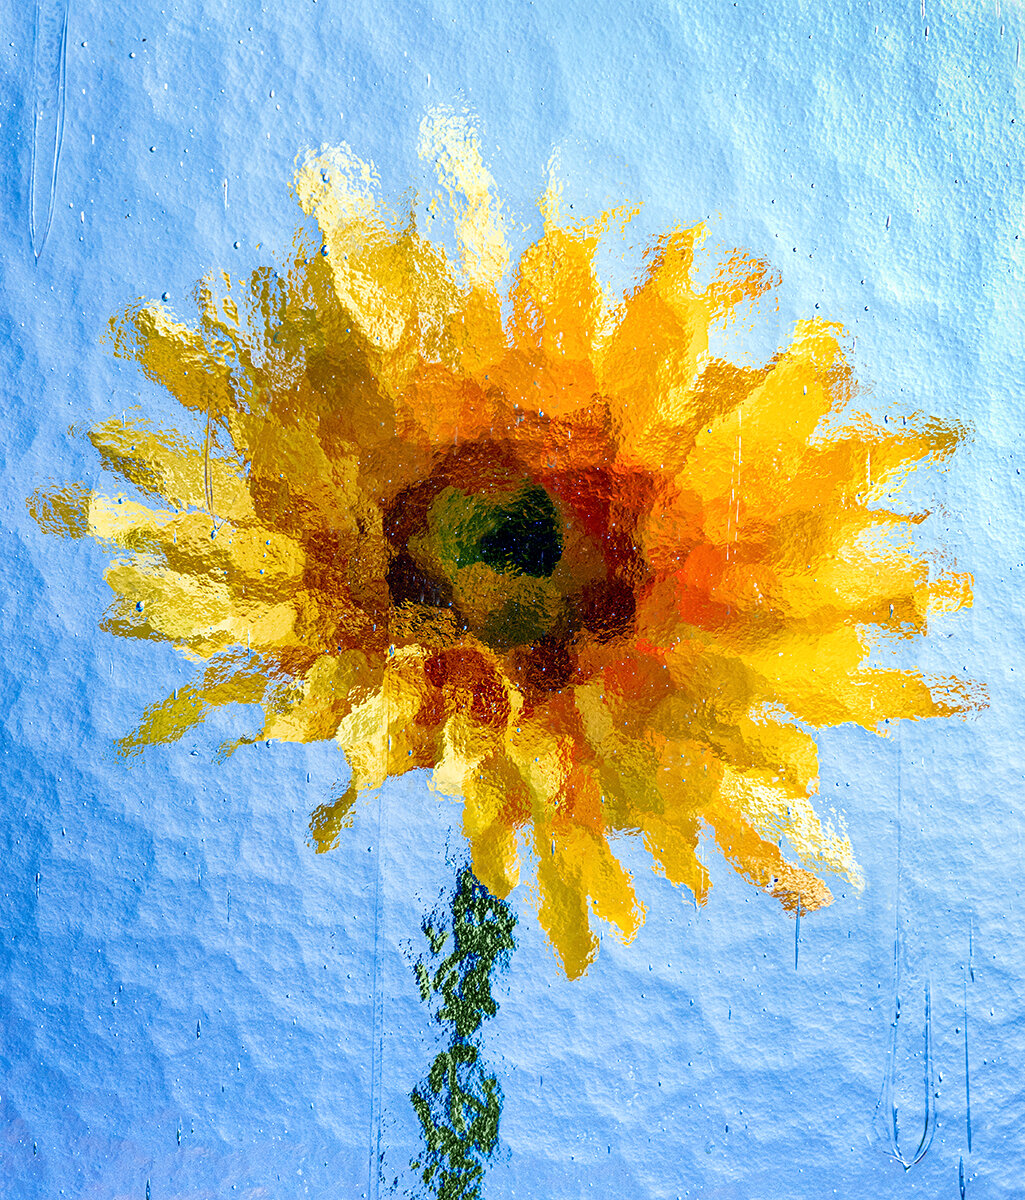 YELLOW FLOWER BEHIND TEXTURED GLASS - David Jordan